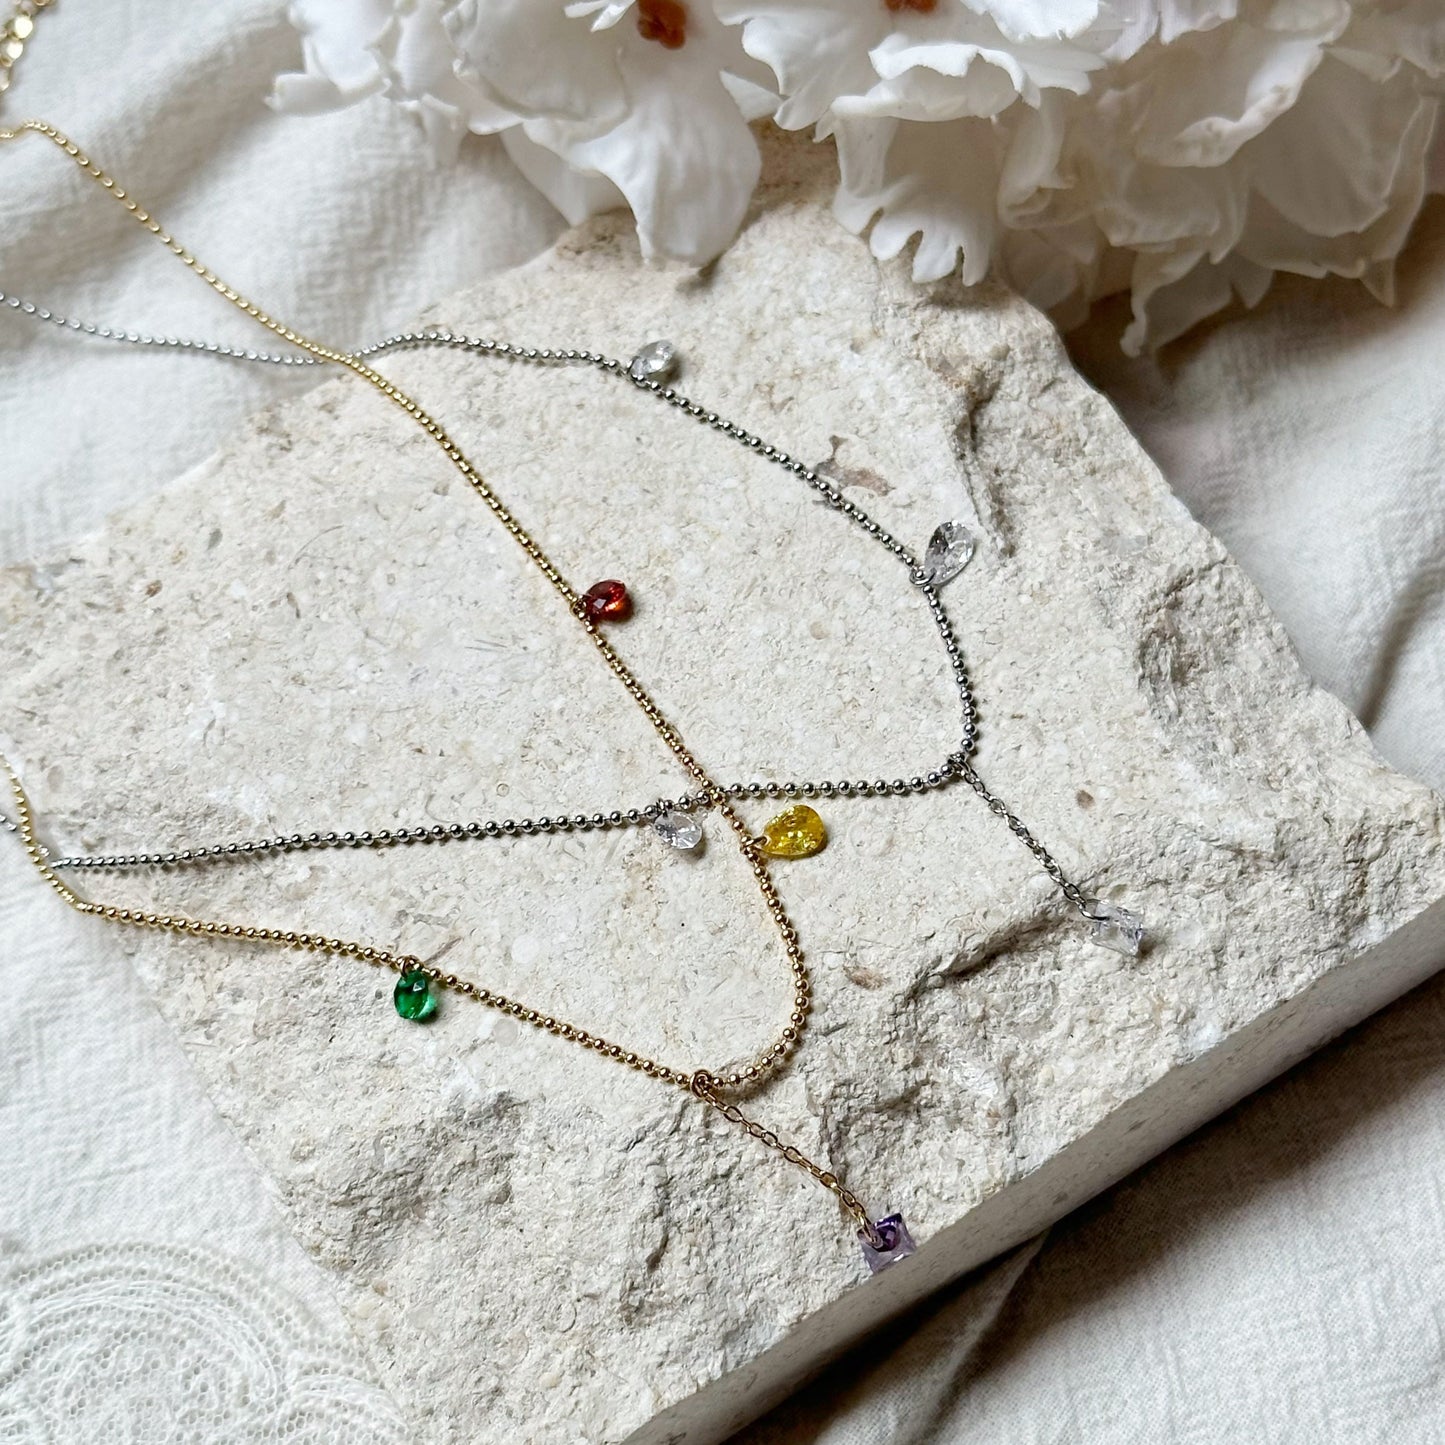 Unique Gemstone Necklace